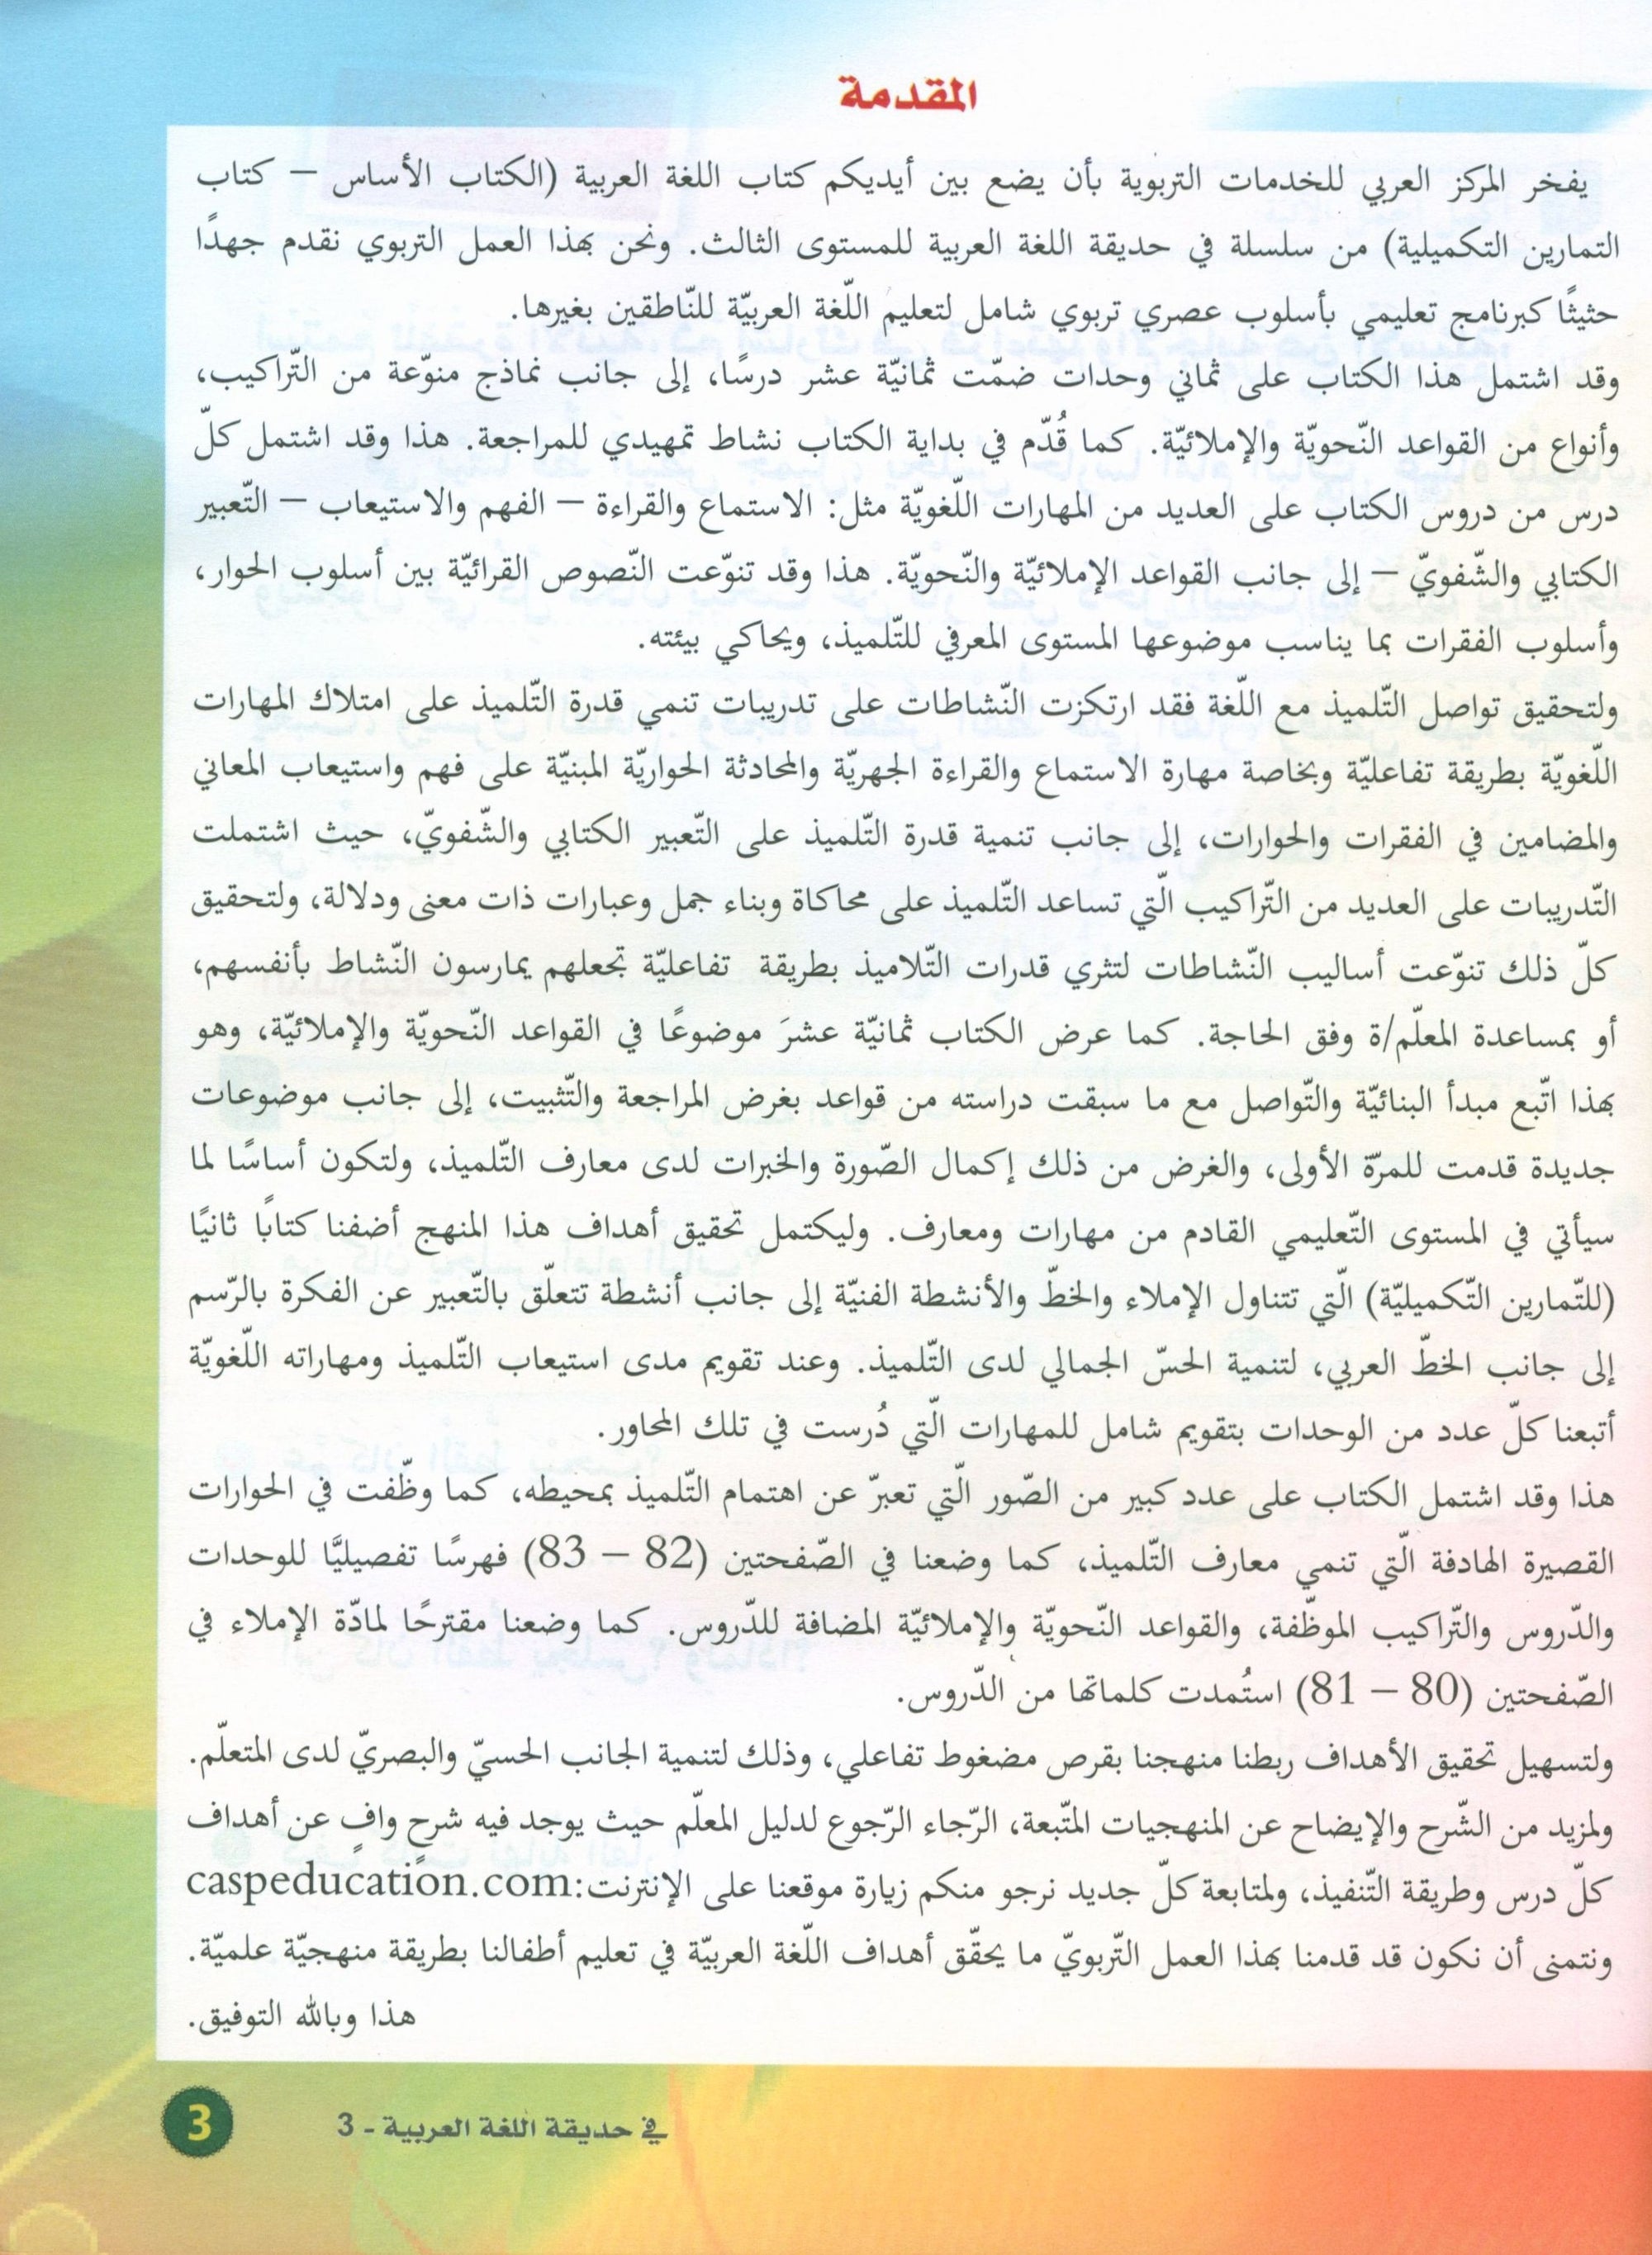 In the Arabic Garden Textbook Level 3 في حديقة اللغة العربية